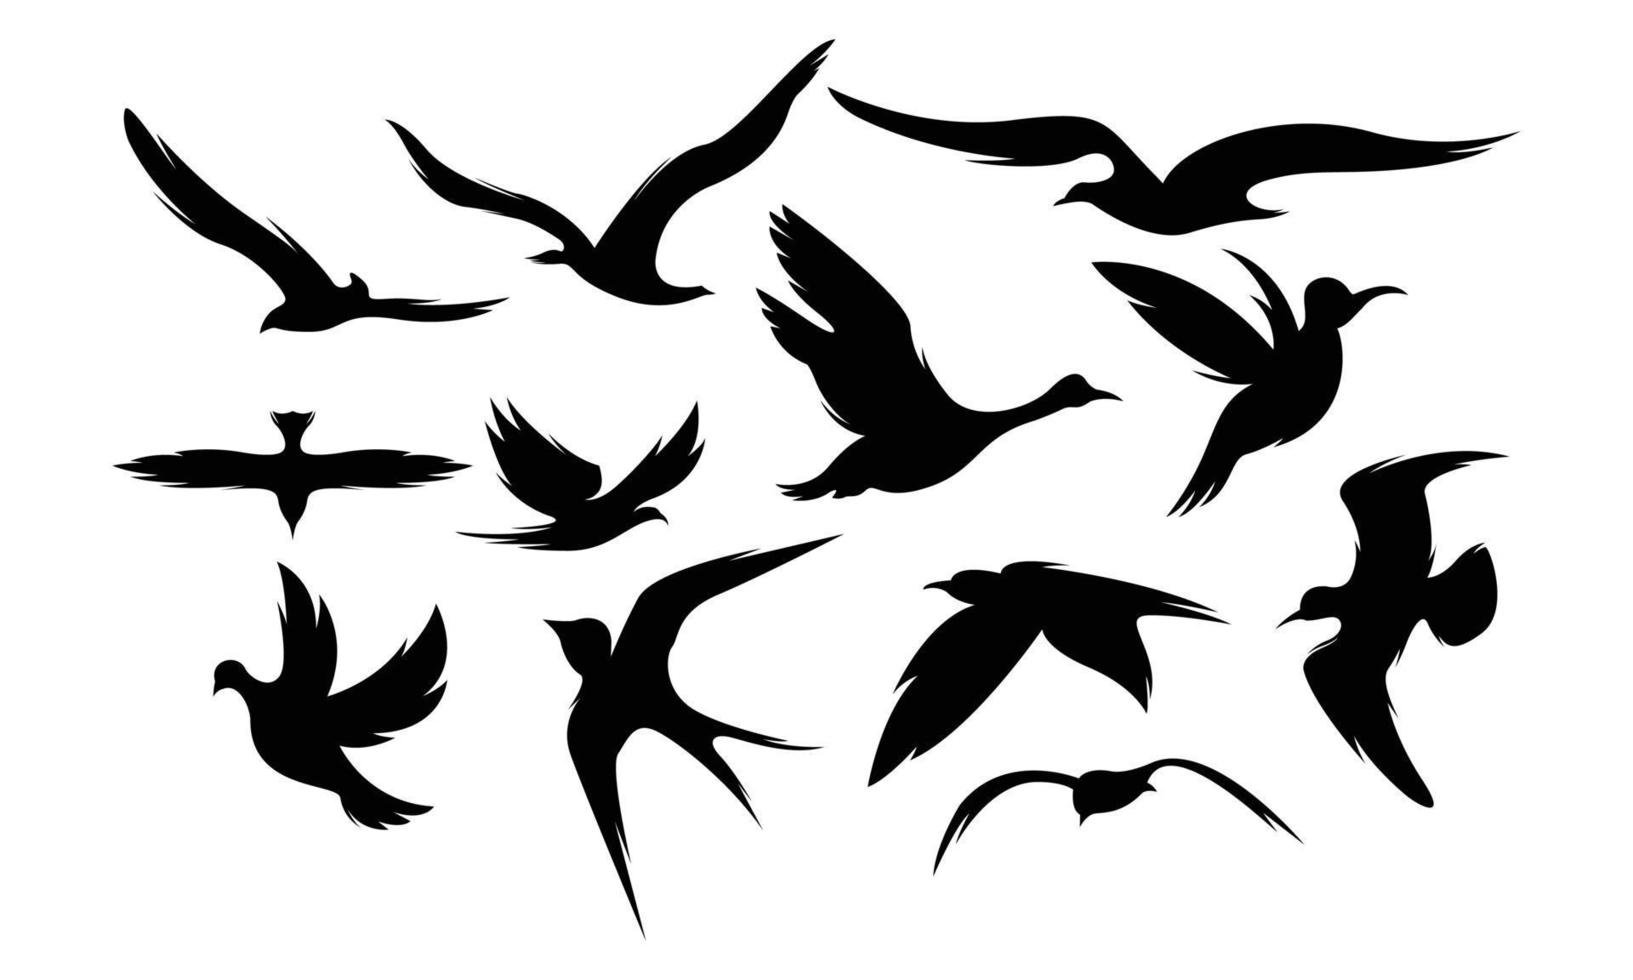 Bird silhouette icon symbol illustration vector set bundle asset template shadow, black, pultry, fly bird editable